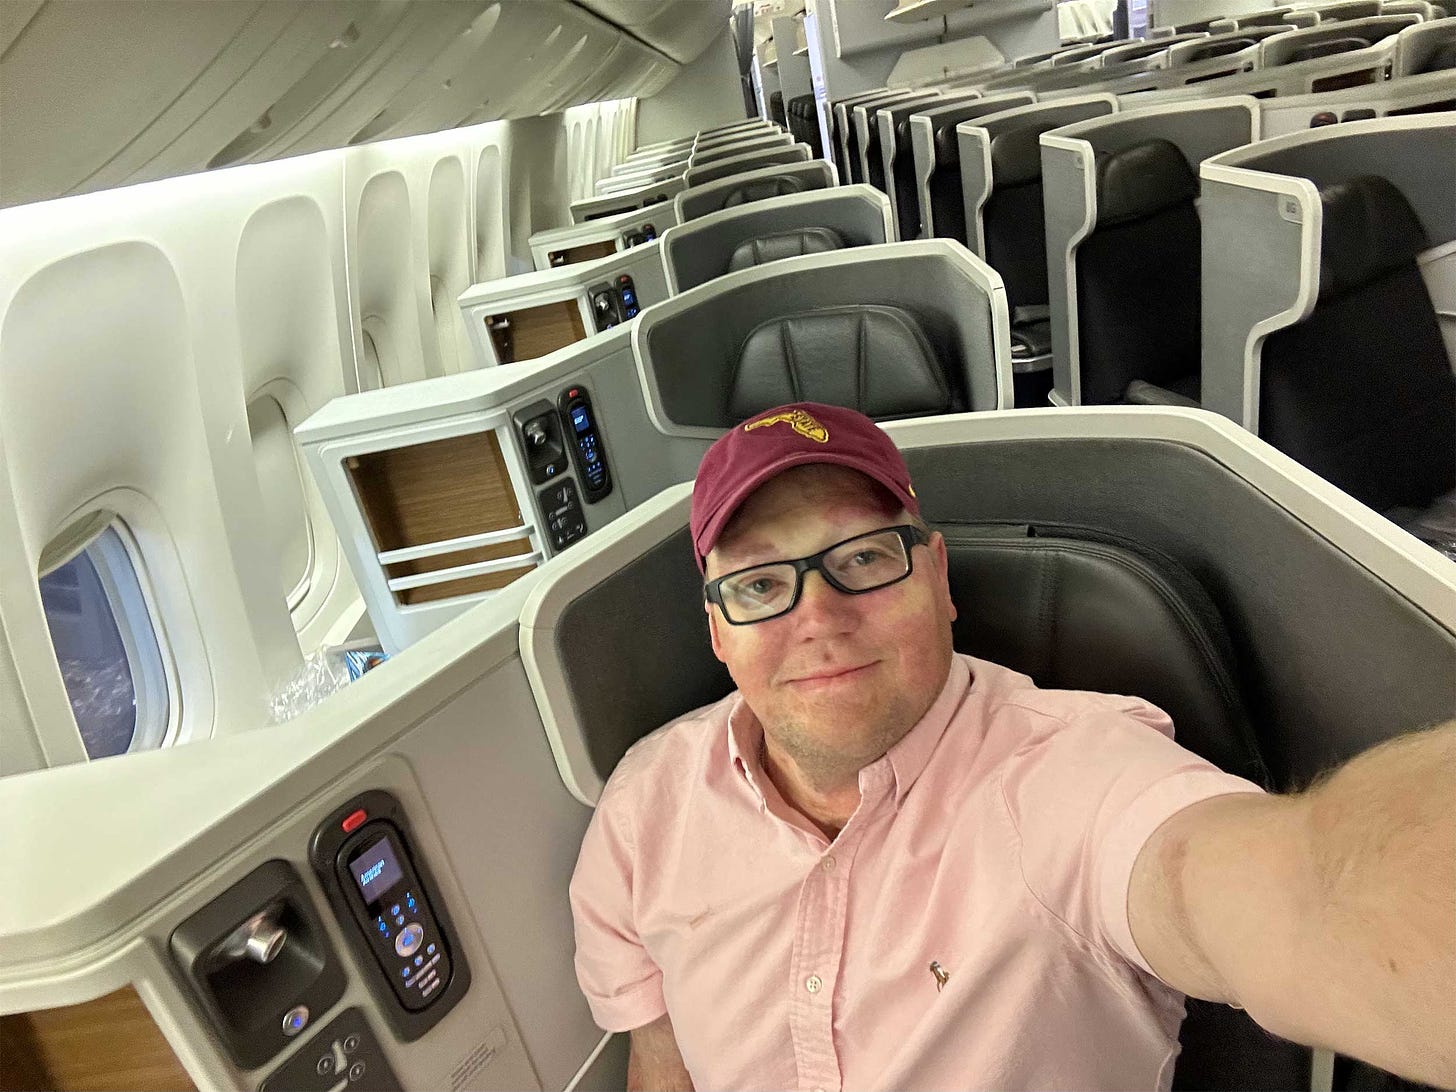 Selfie of John wearing a pink shirt and garnet baseball cap seated in business class on a Boeing 777 aircraft.